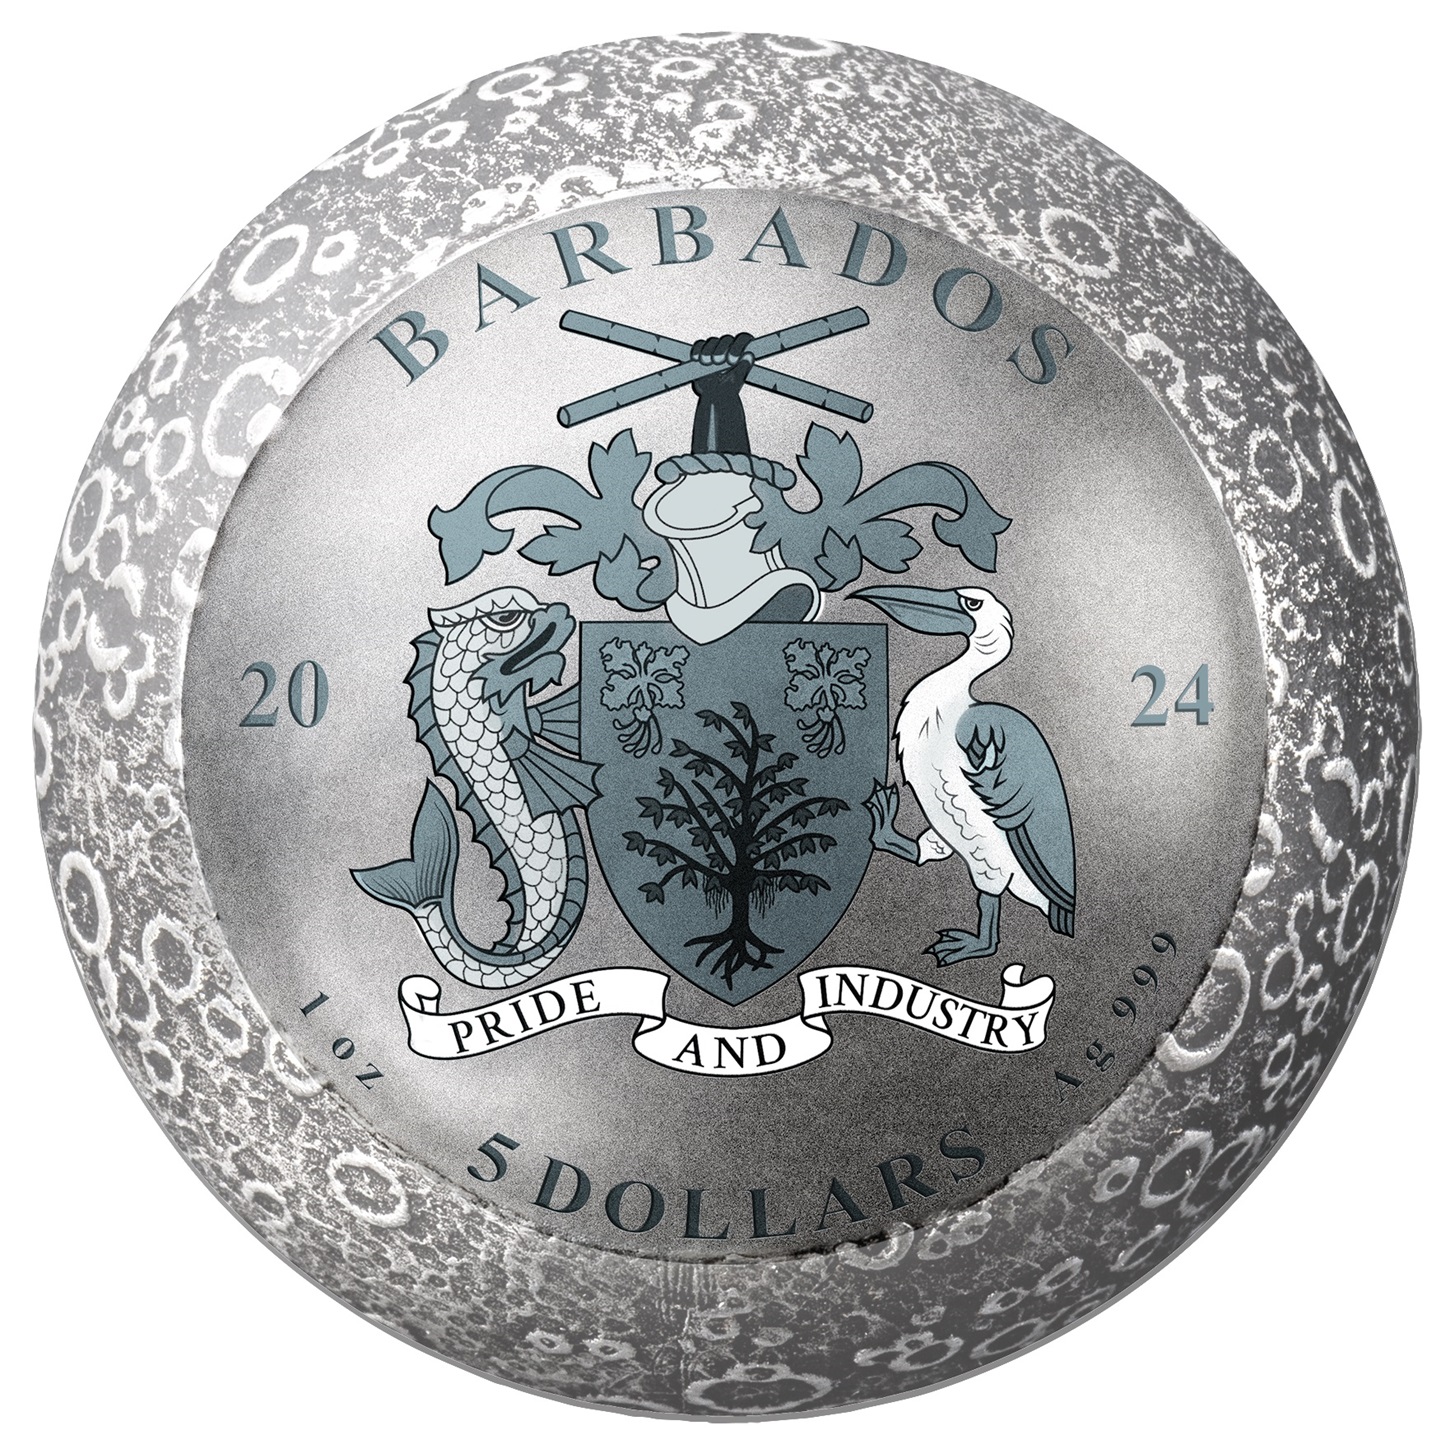 (W022.5.D.2024.1.oz.Ag.1559590112) 5 Dollars Barbados 2024 1 oz Antique silver - Moon landing (face value) (zoom)